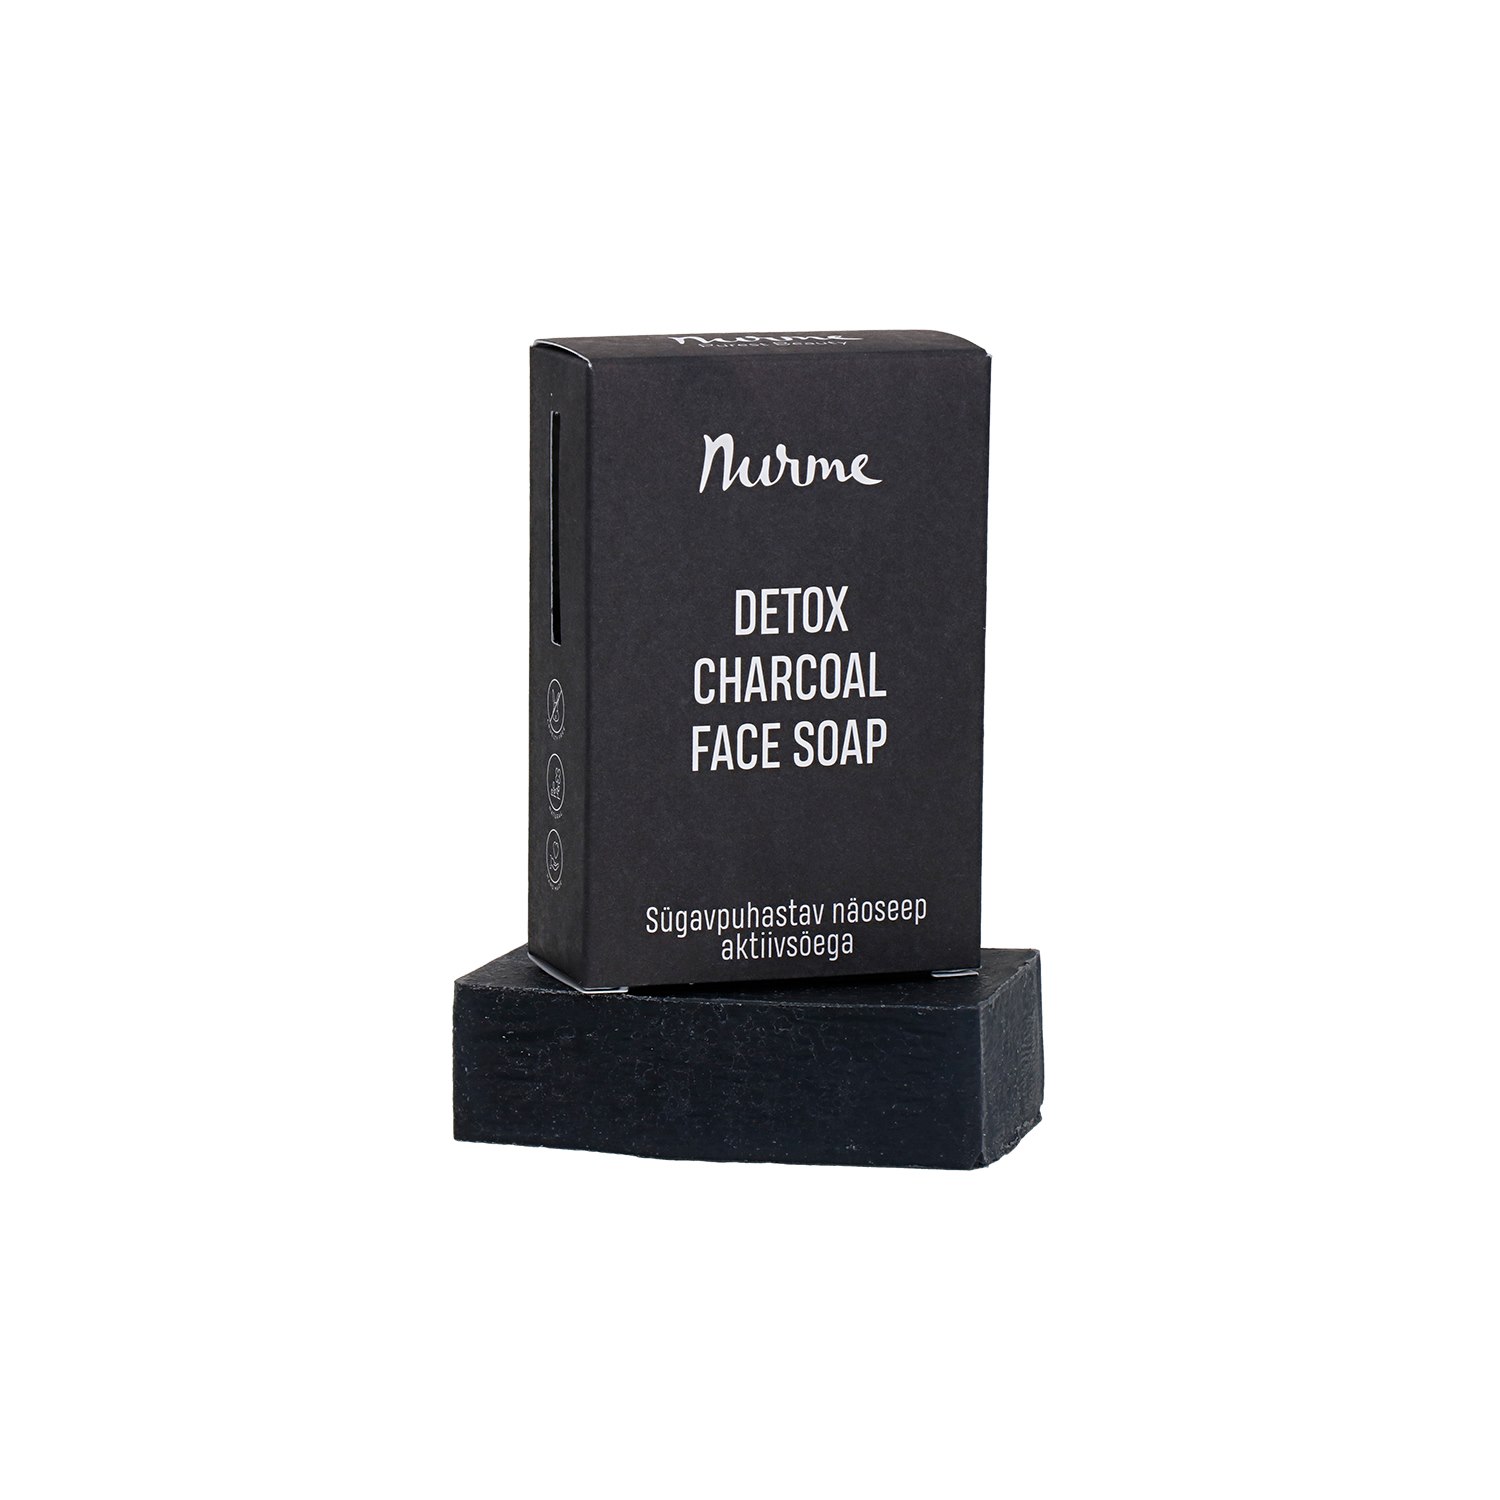 Nurme Detox Charcoal Face Soap, 100 g